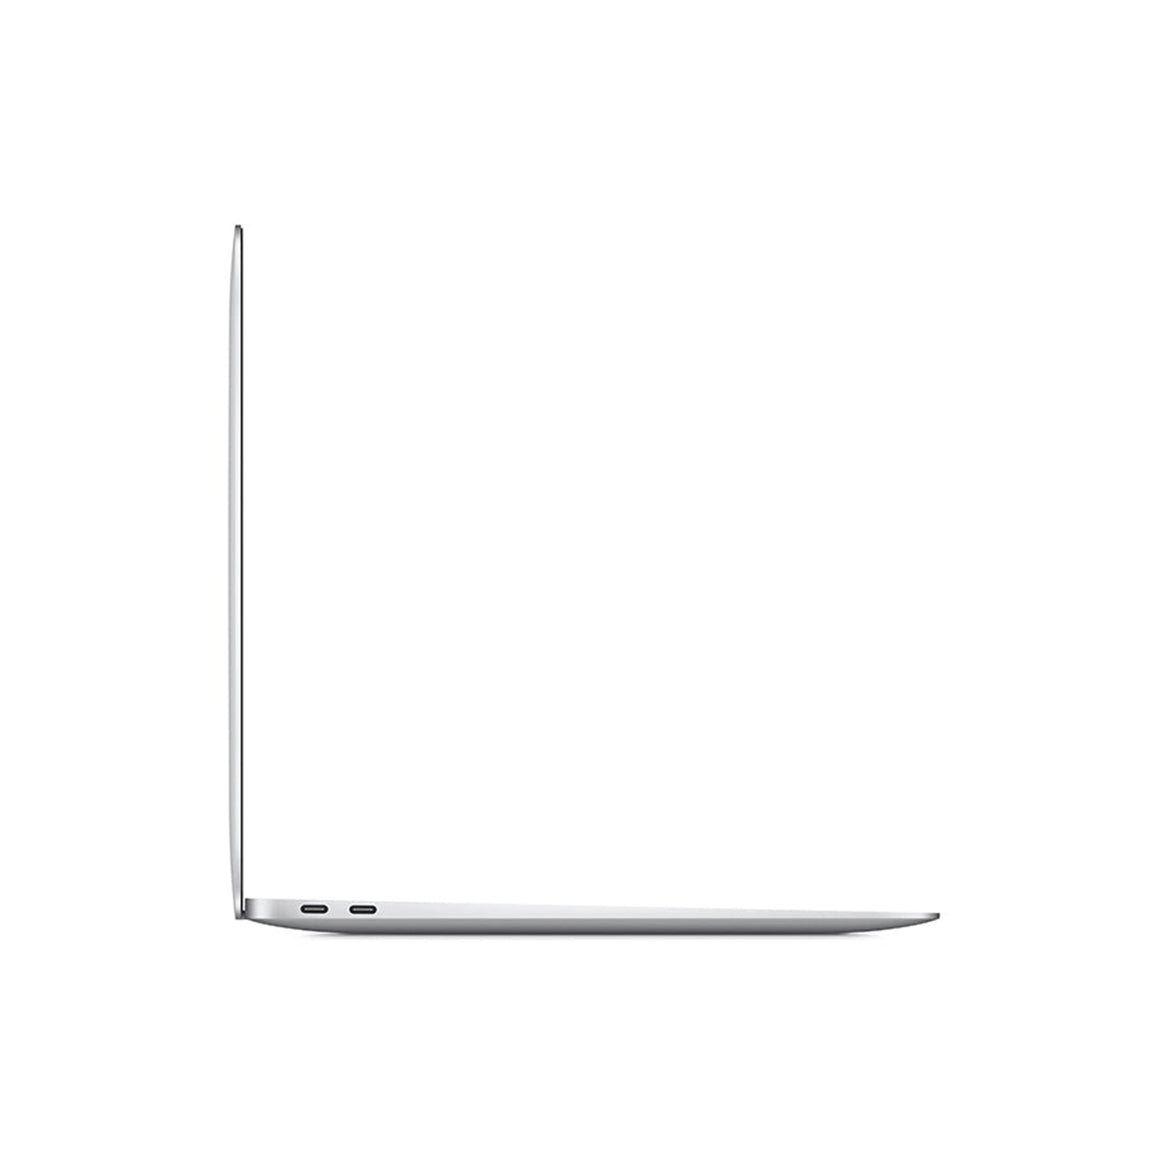 MacBook Air M1 2020 silver side view